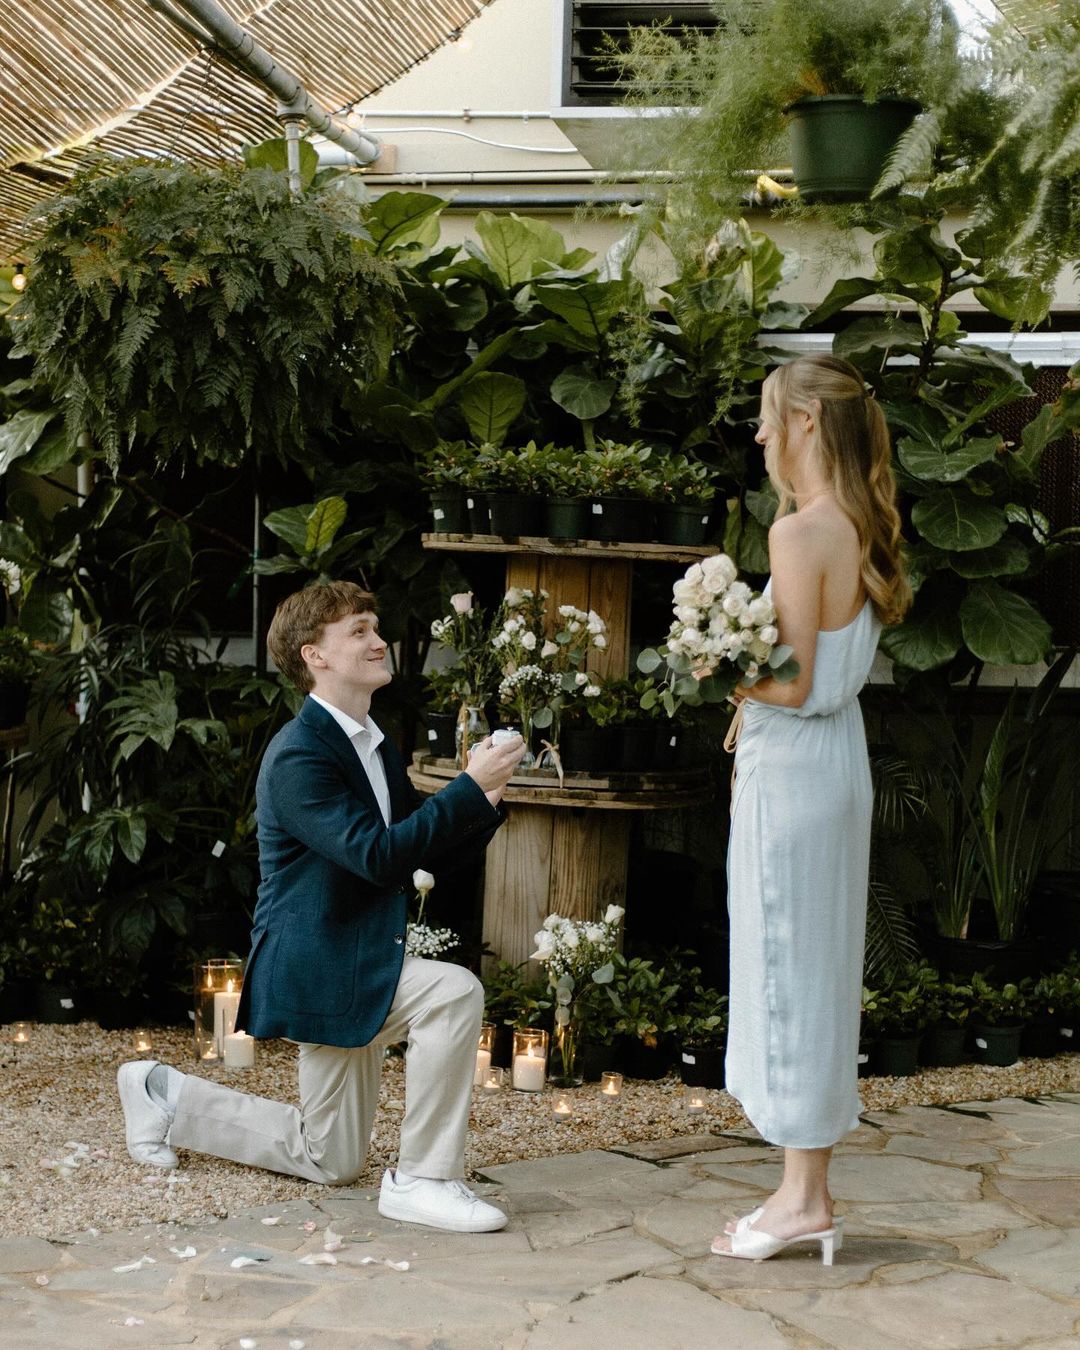 Matt Lintz proposing to his girlfriend Gracie Sapp